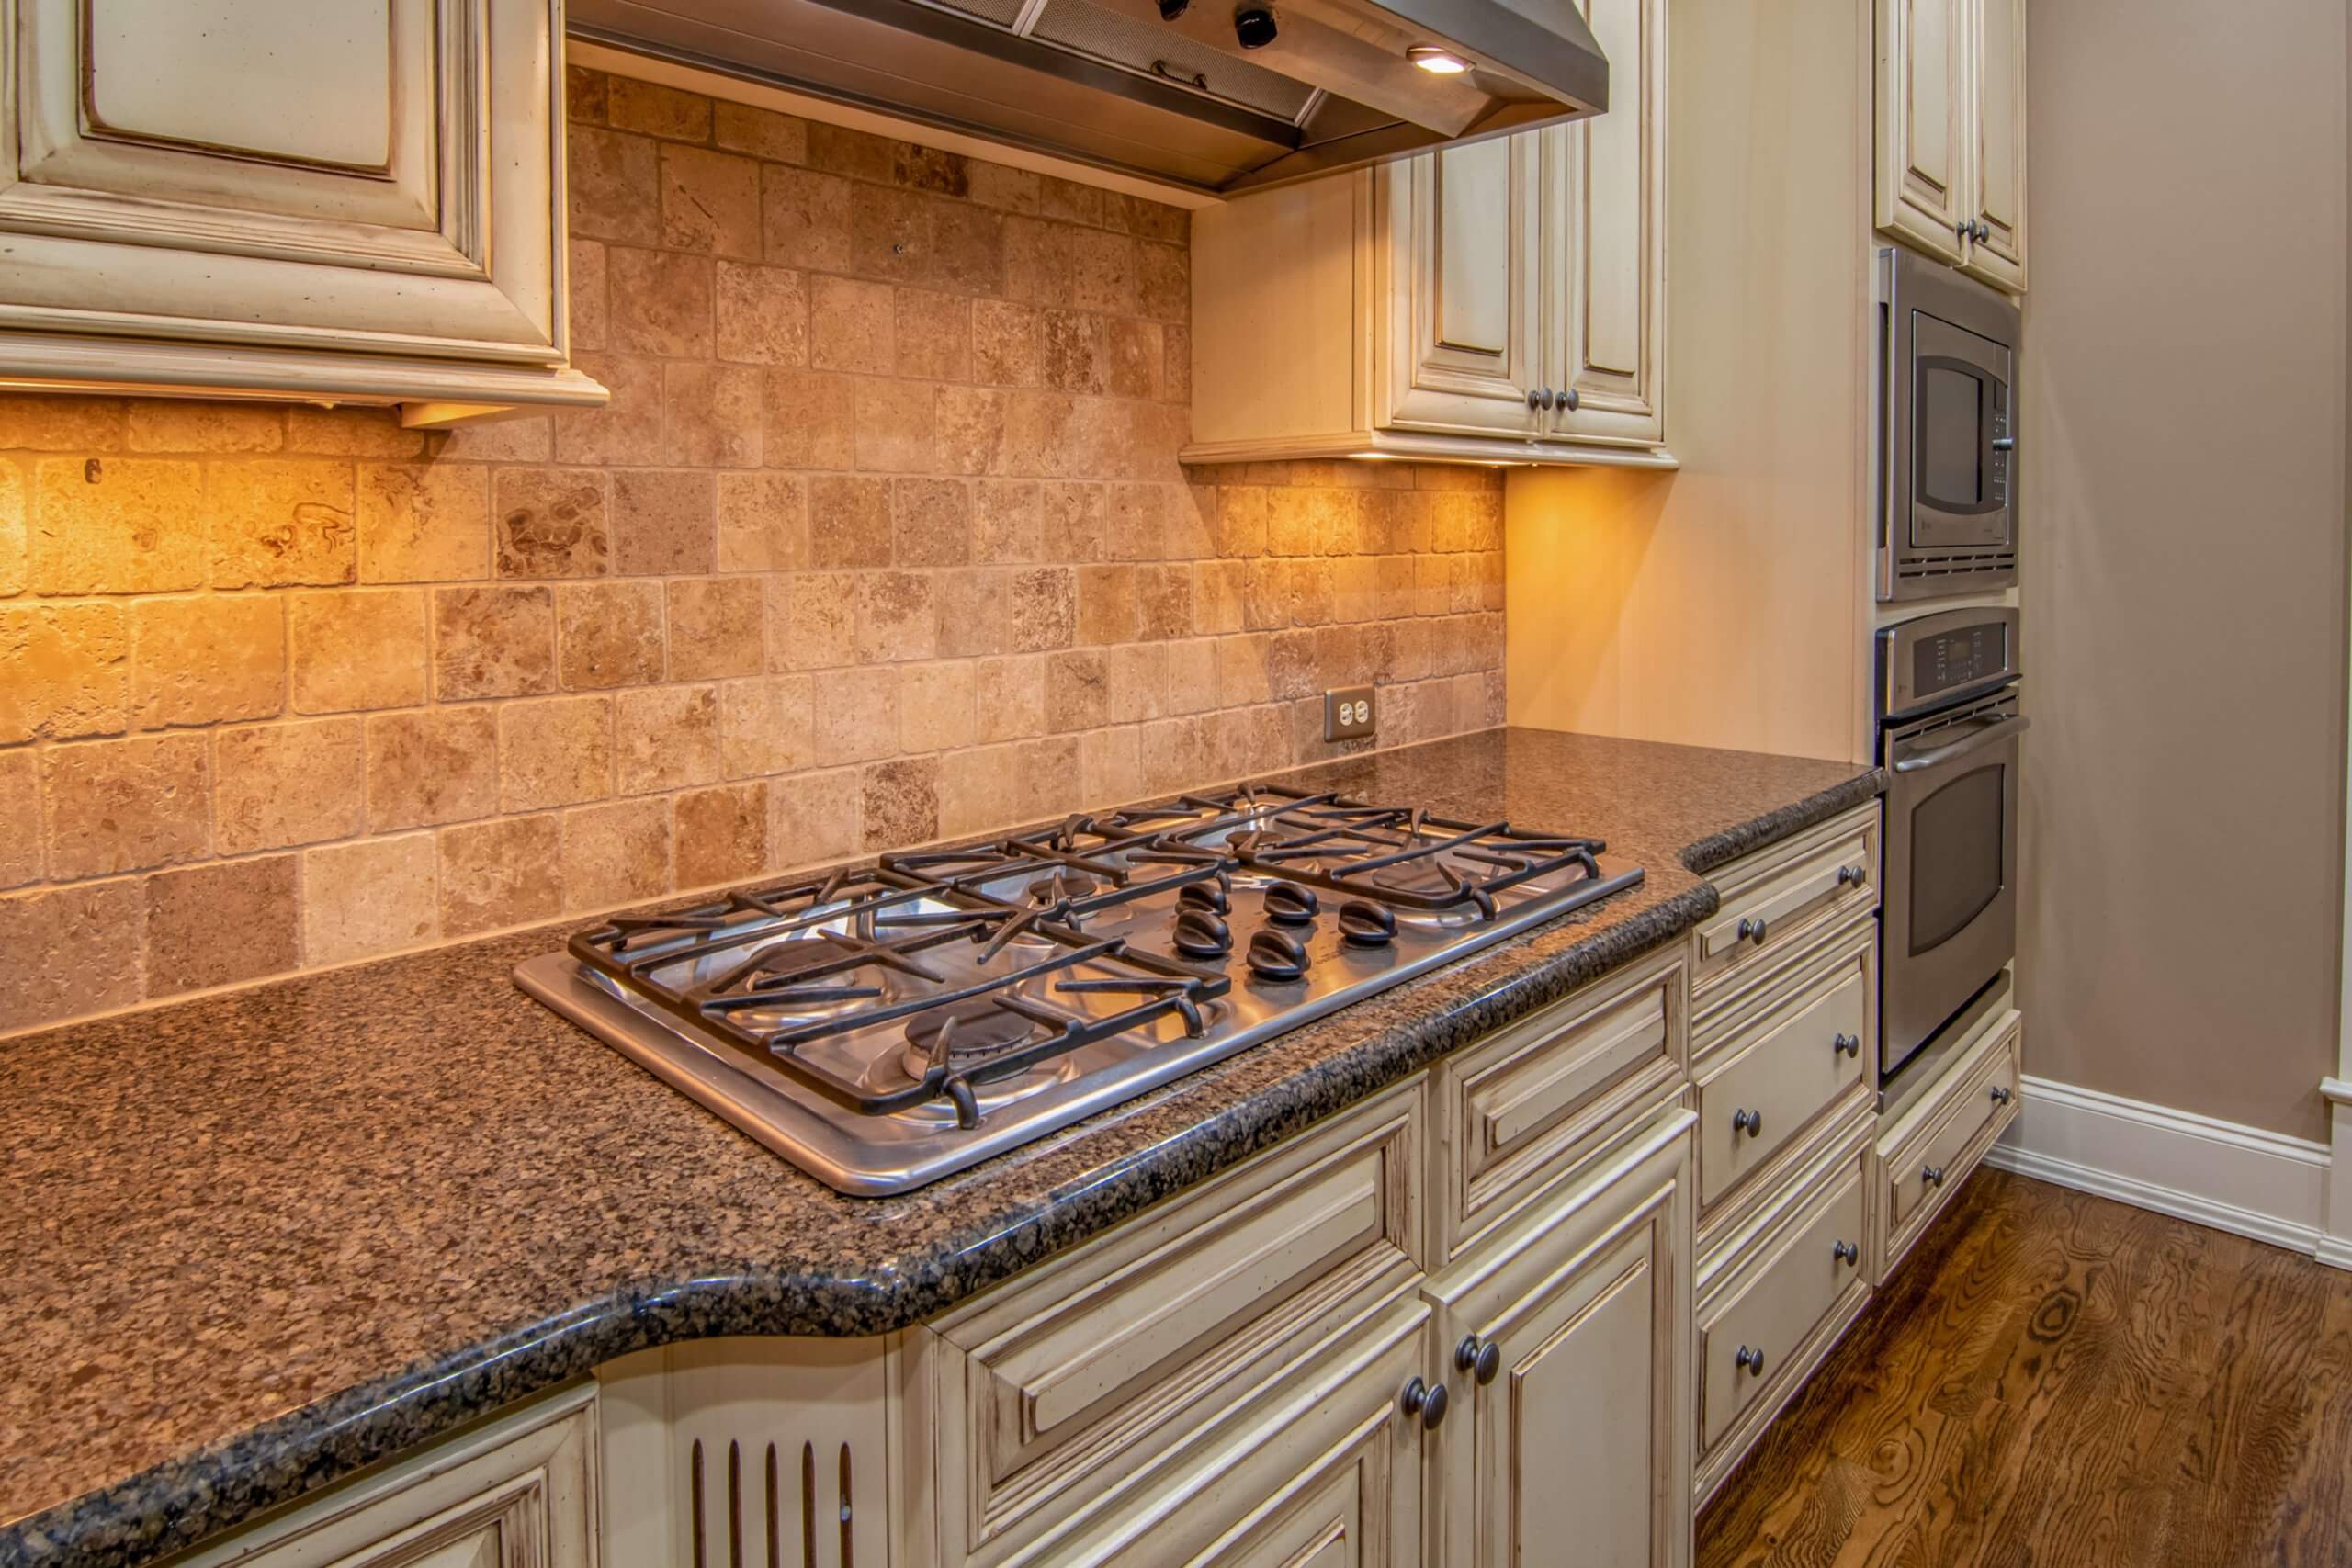 The granite countertops in a kitchen.